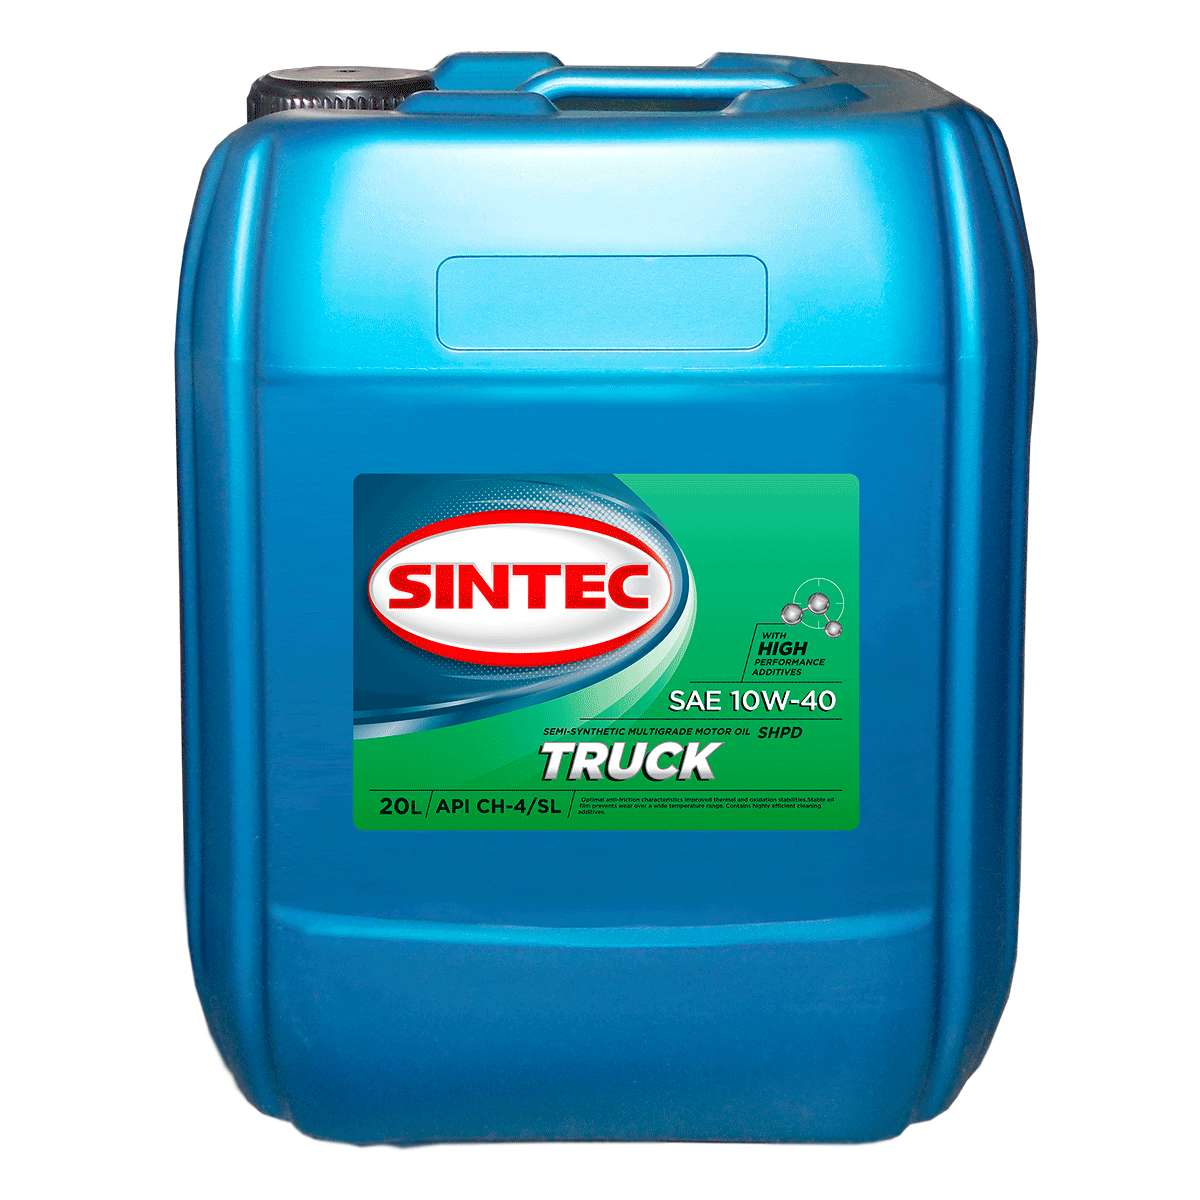 SINTEC TRUCK SAE 10W-40 API CH-4/SL 20л